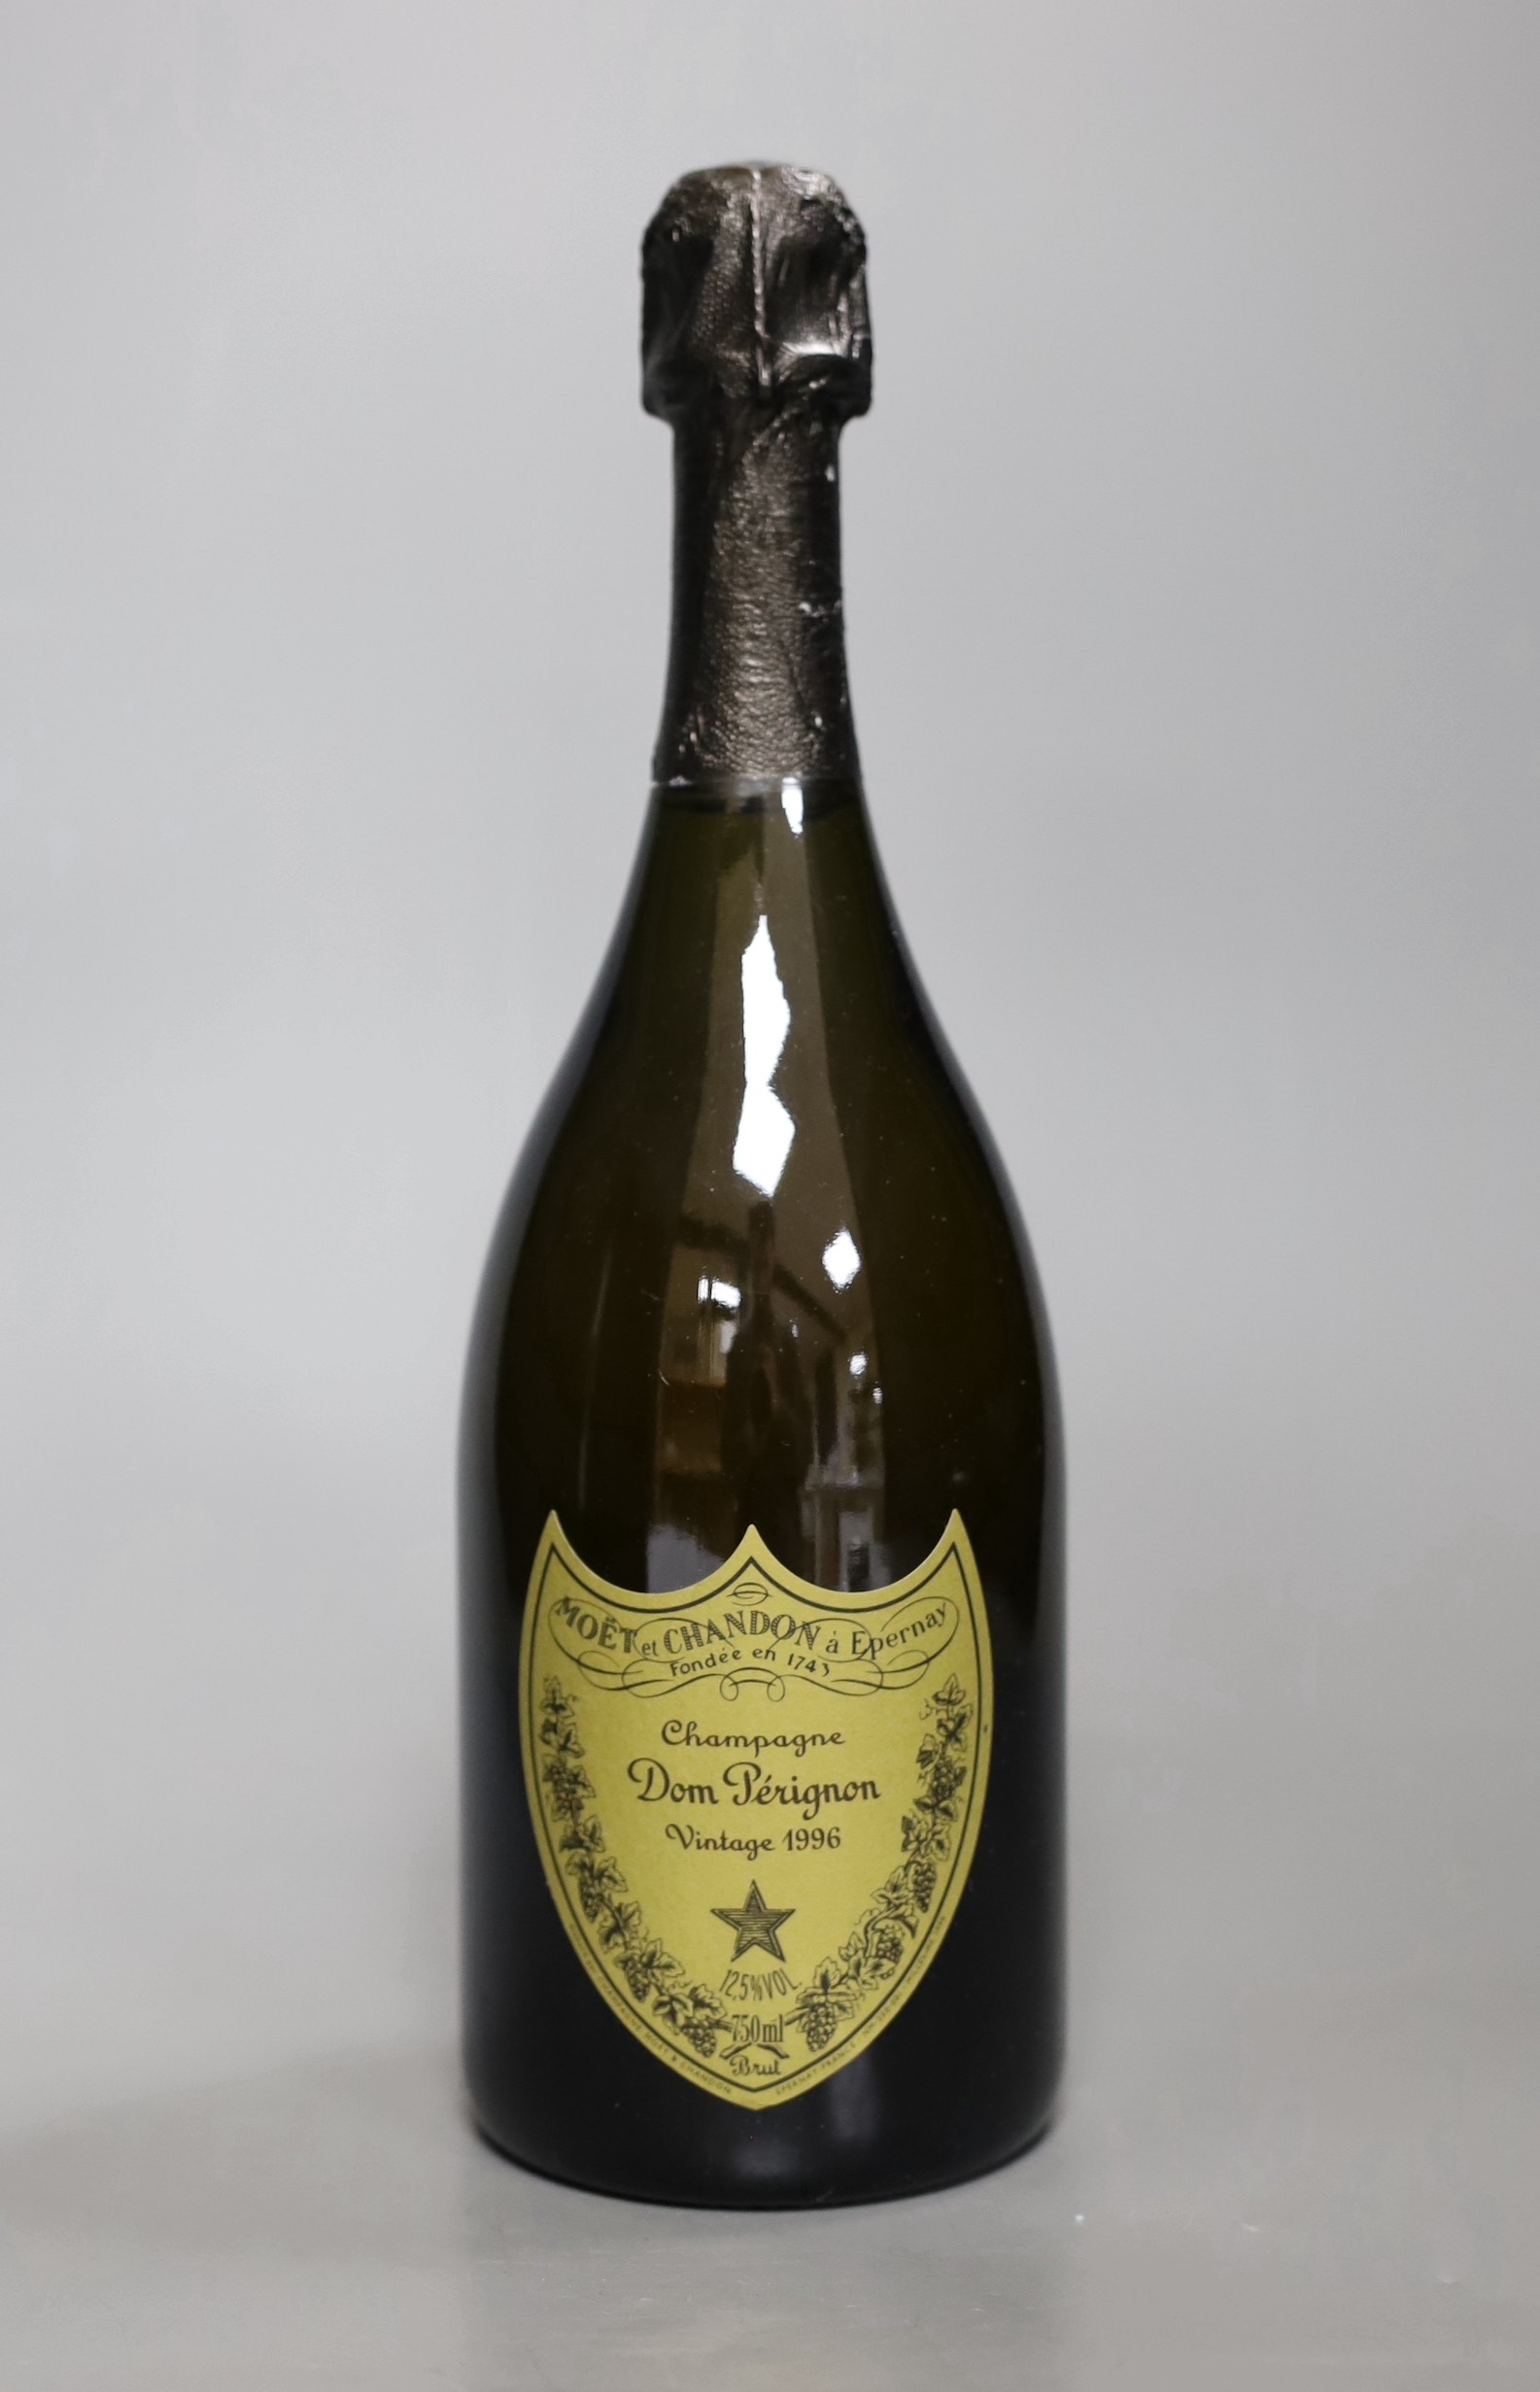 A cased bottle of Dom Perignon 1996 vintage Champagne.